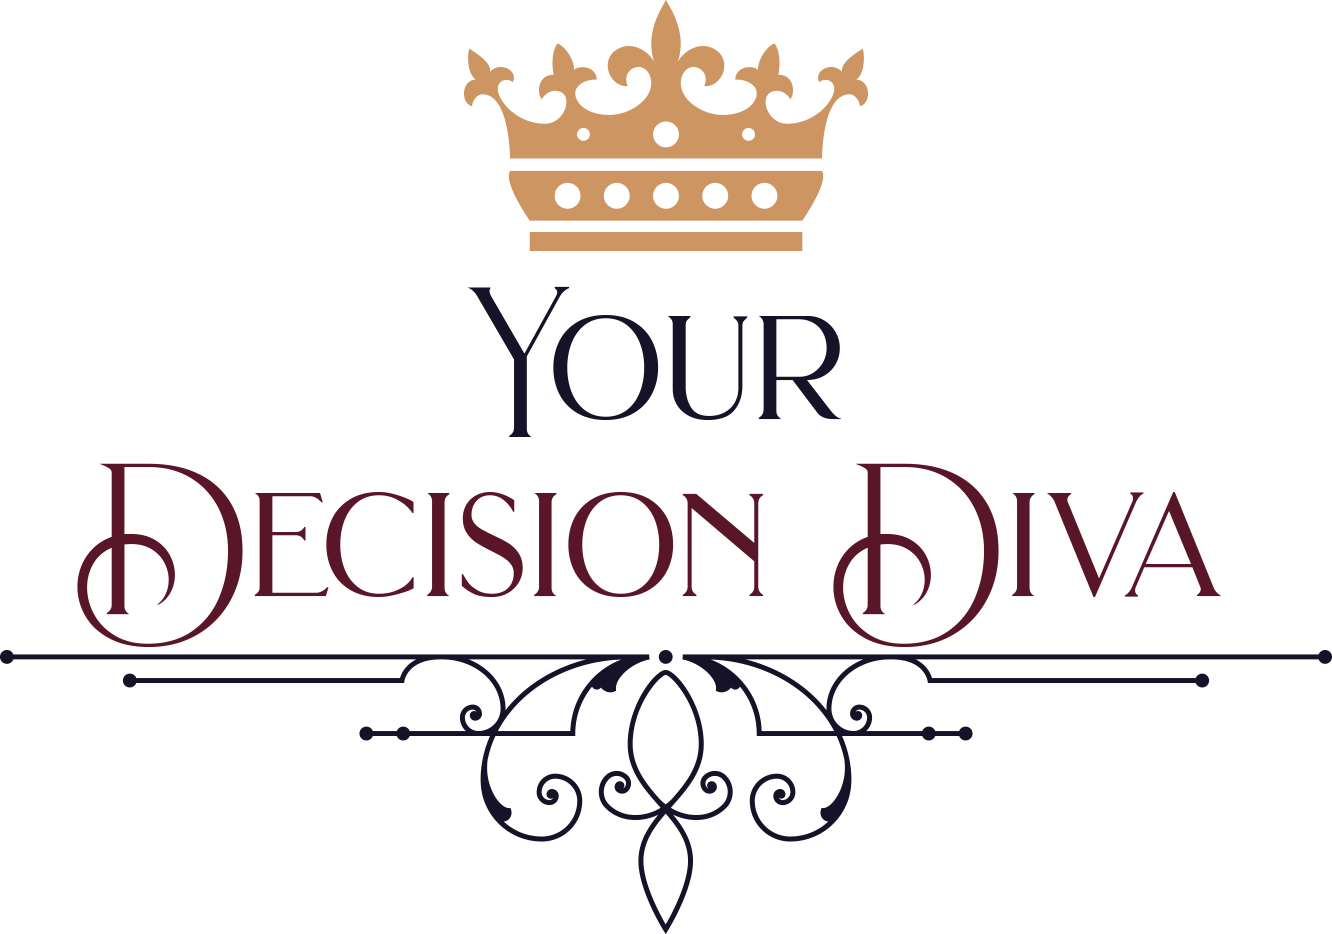 Your Decision Diva